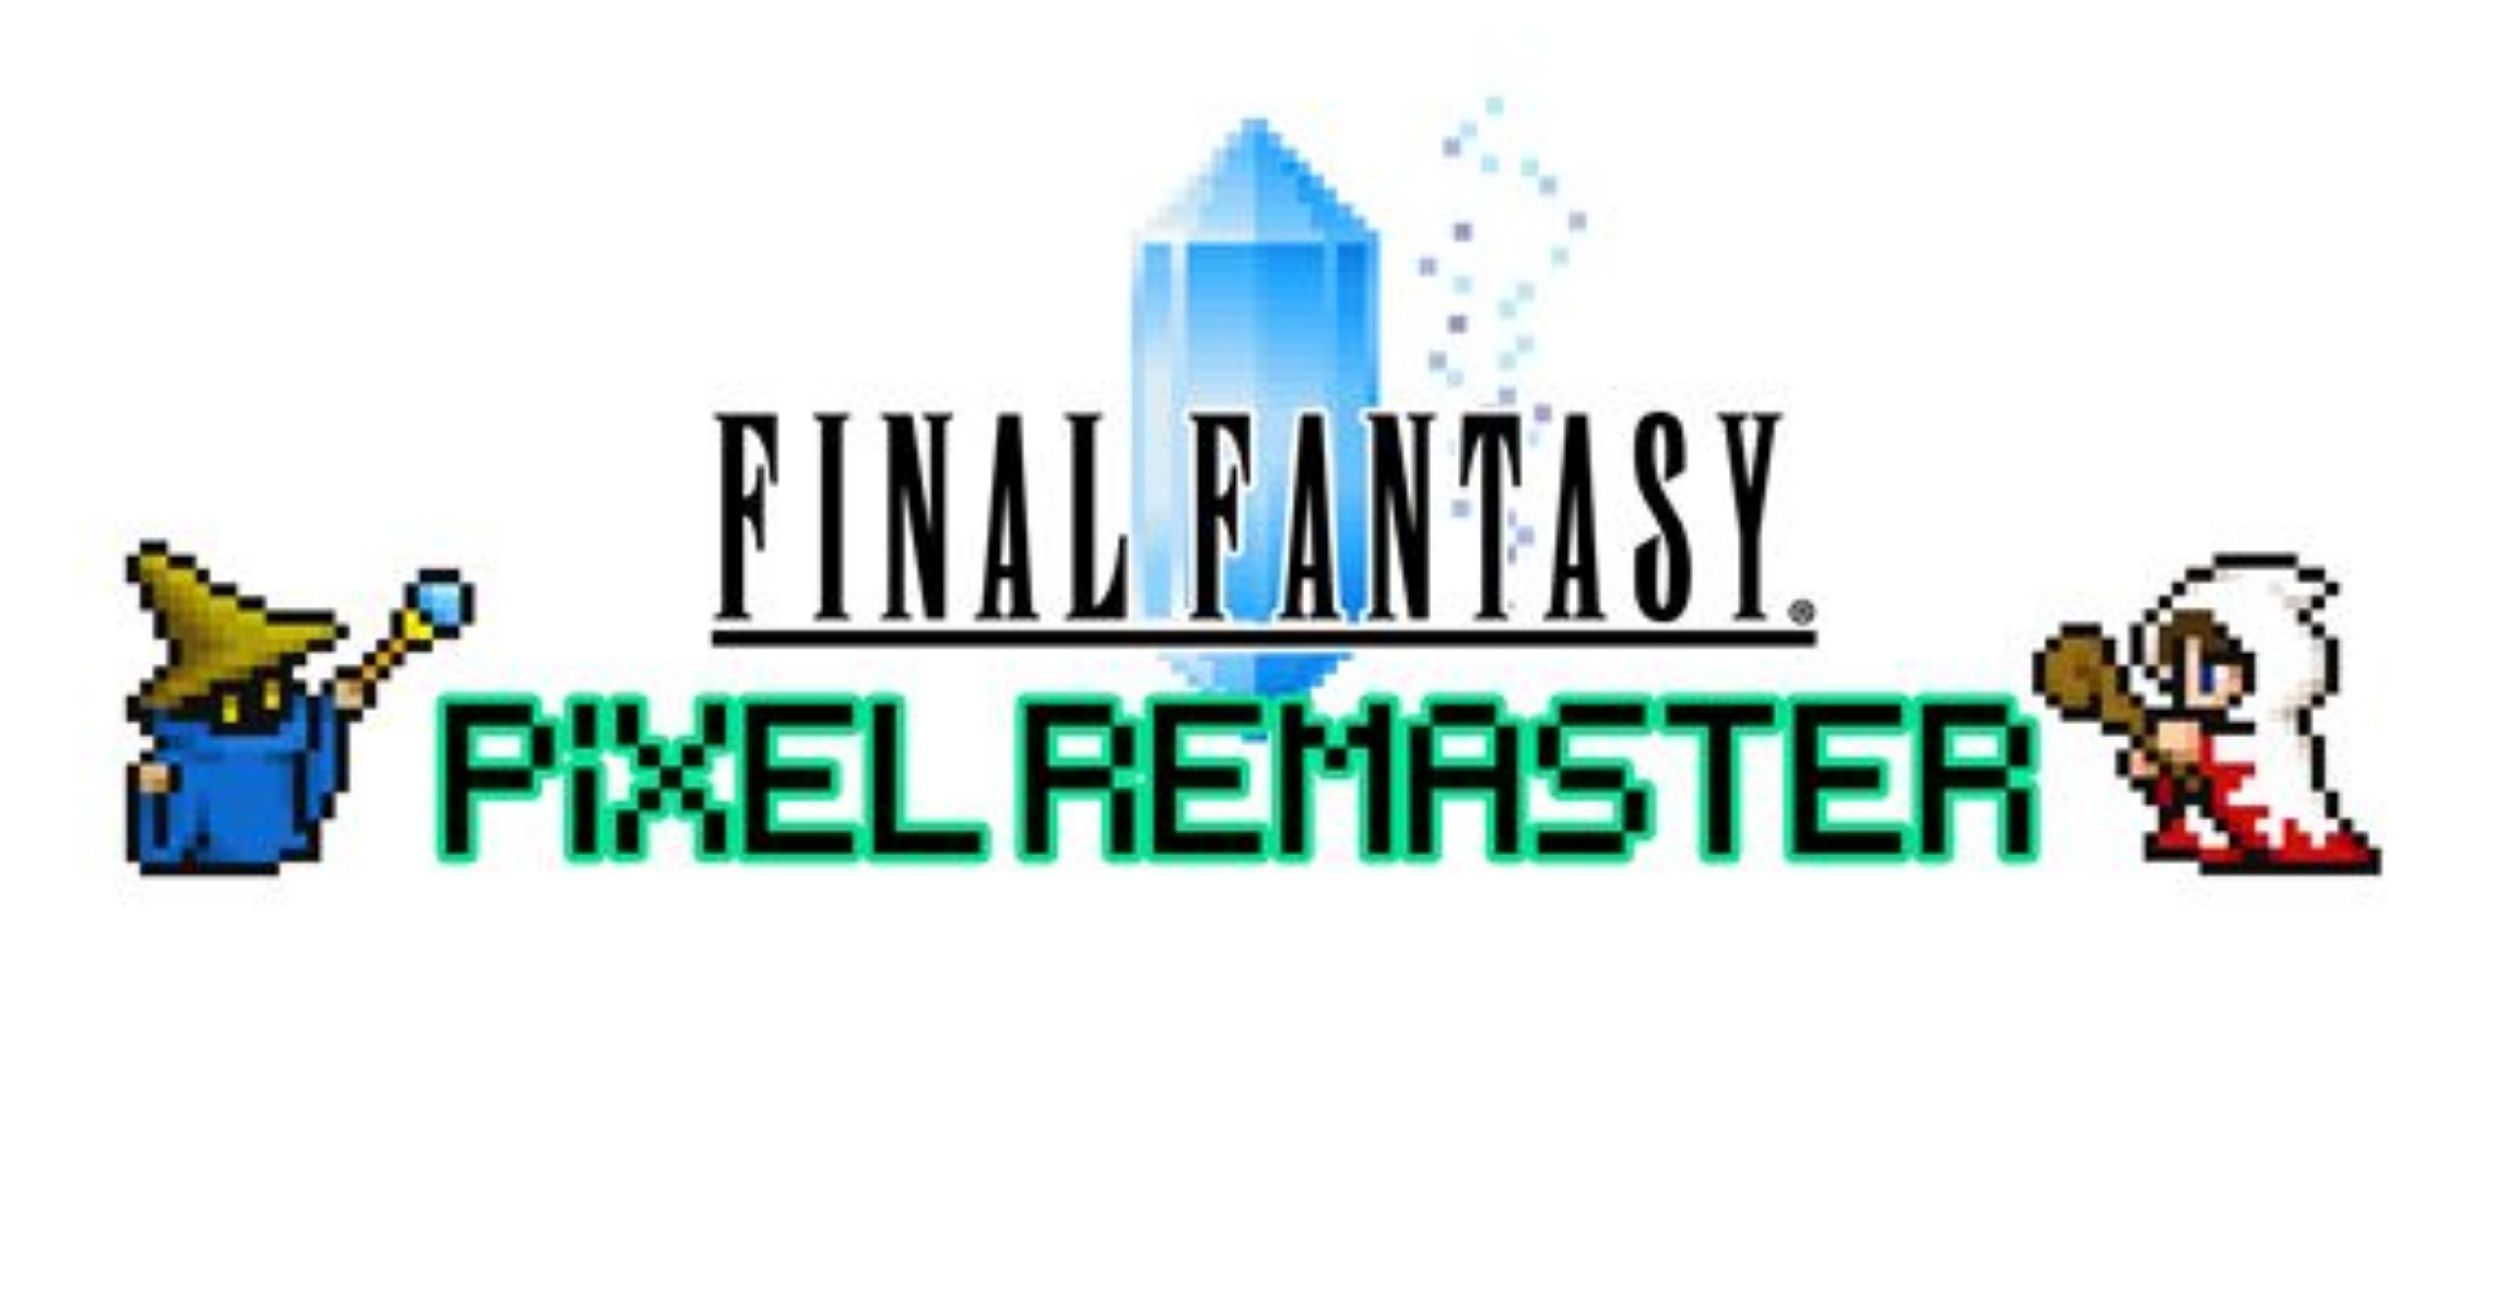 download final fantasy 6 pixel remaster review